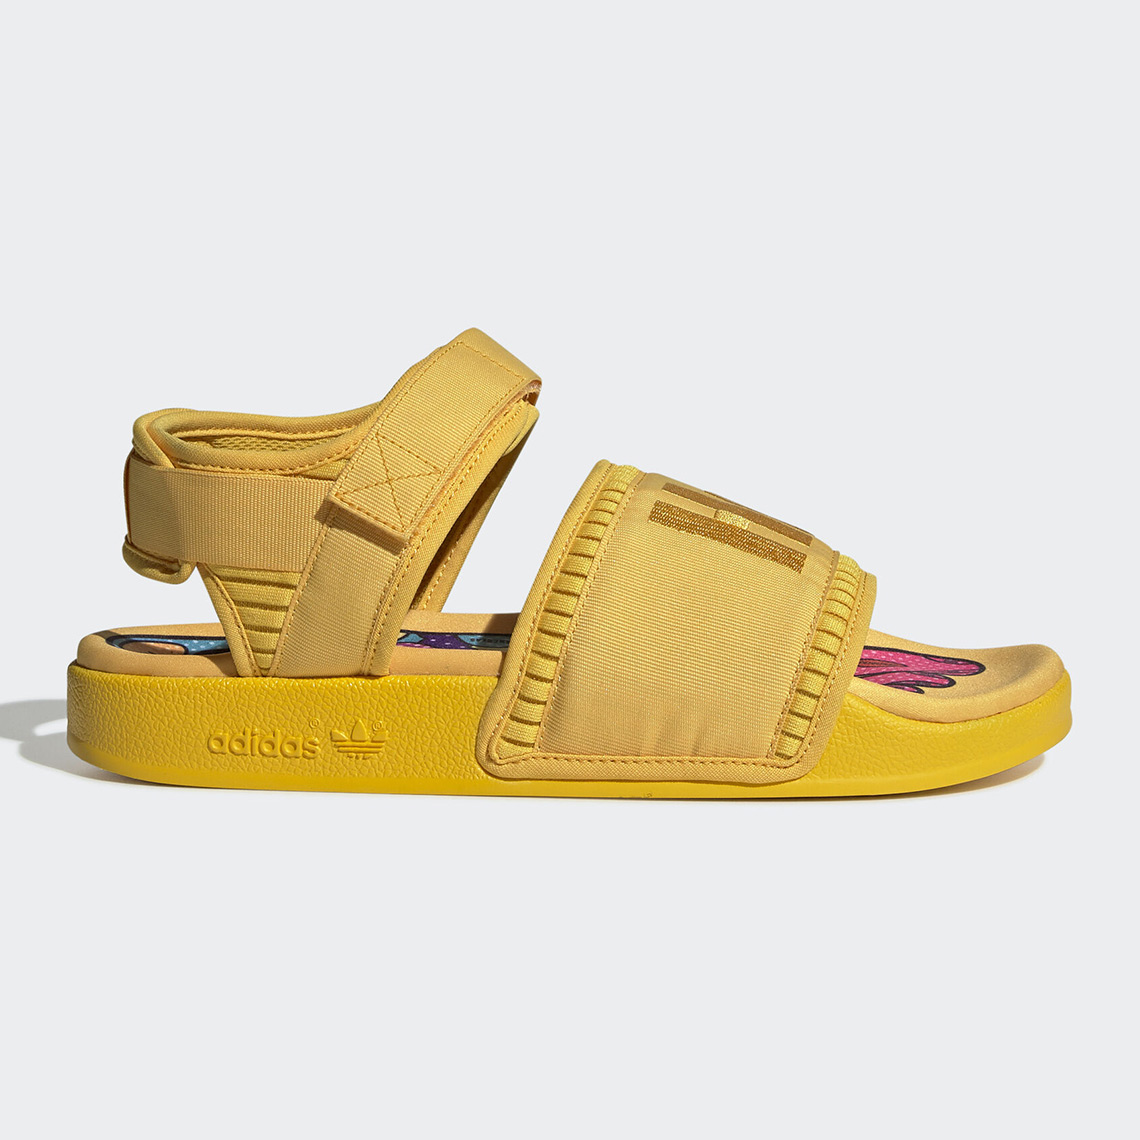 adidas sandals yellow